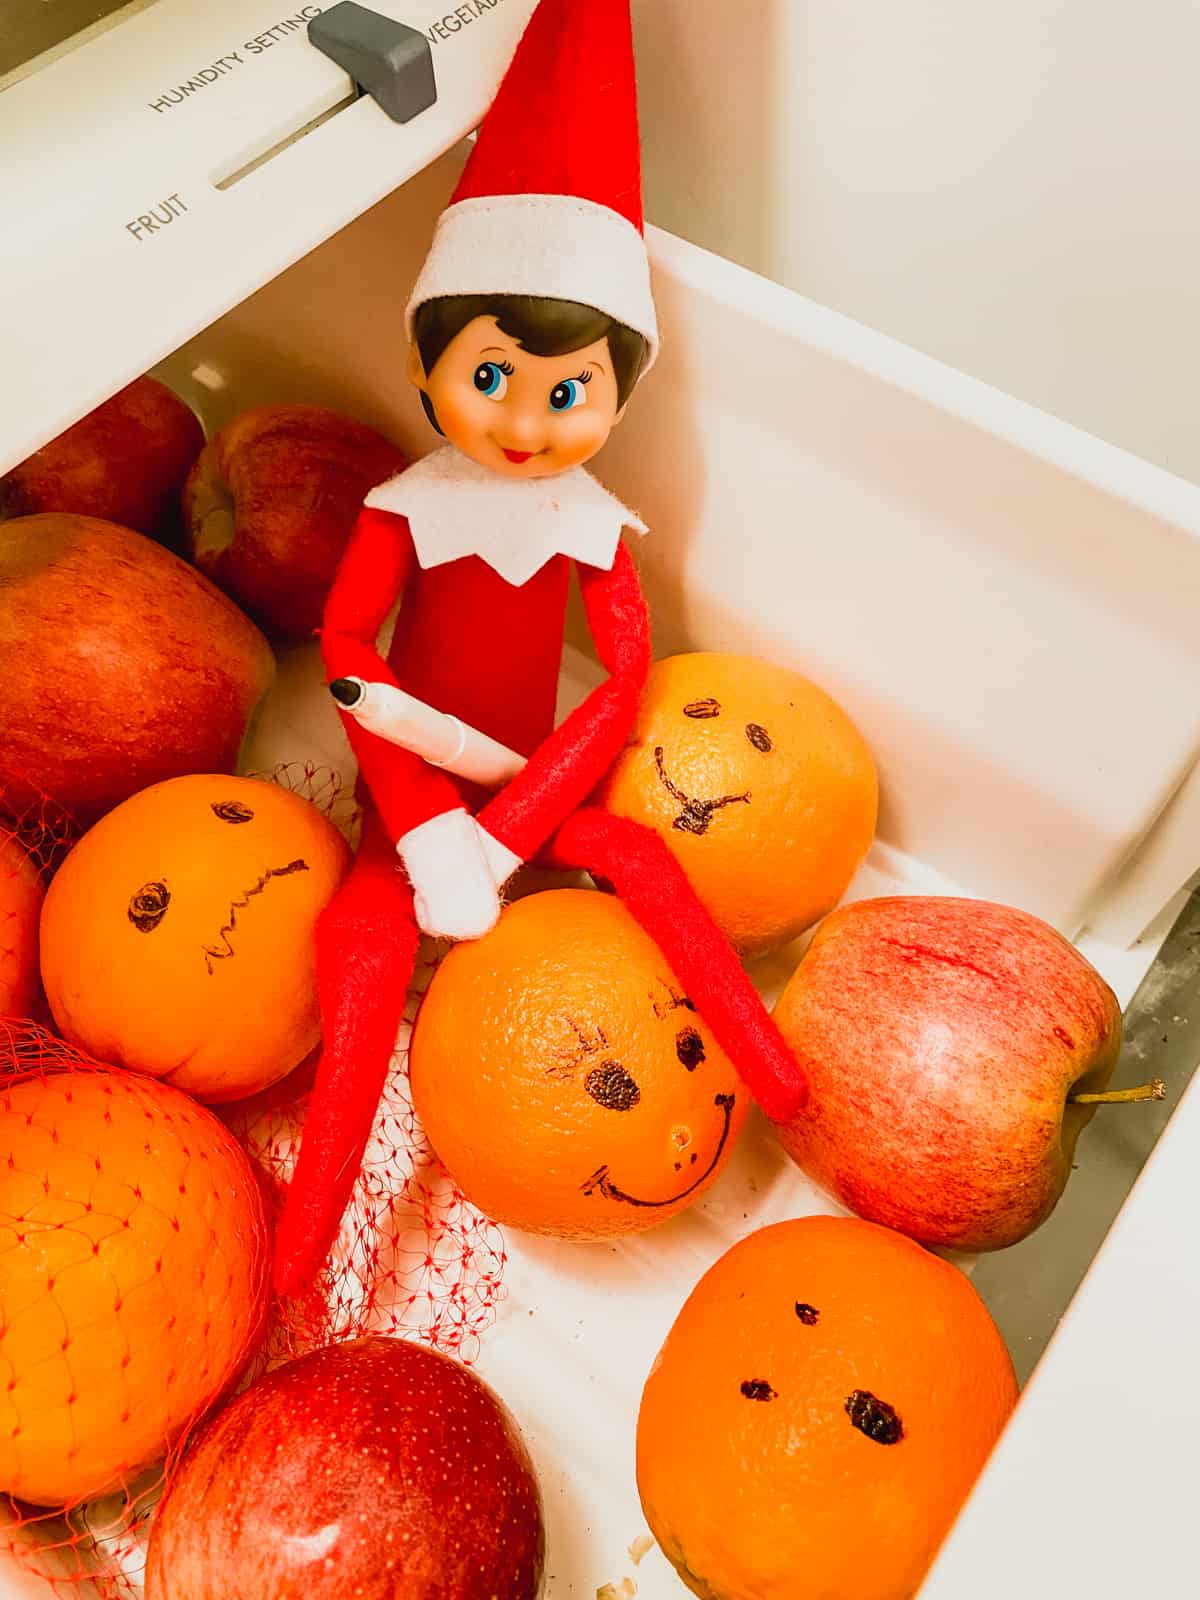 Elf on the shelf with oranges.